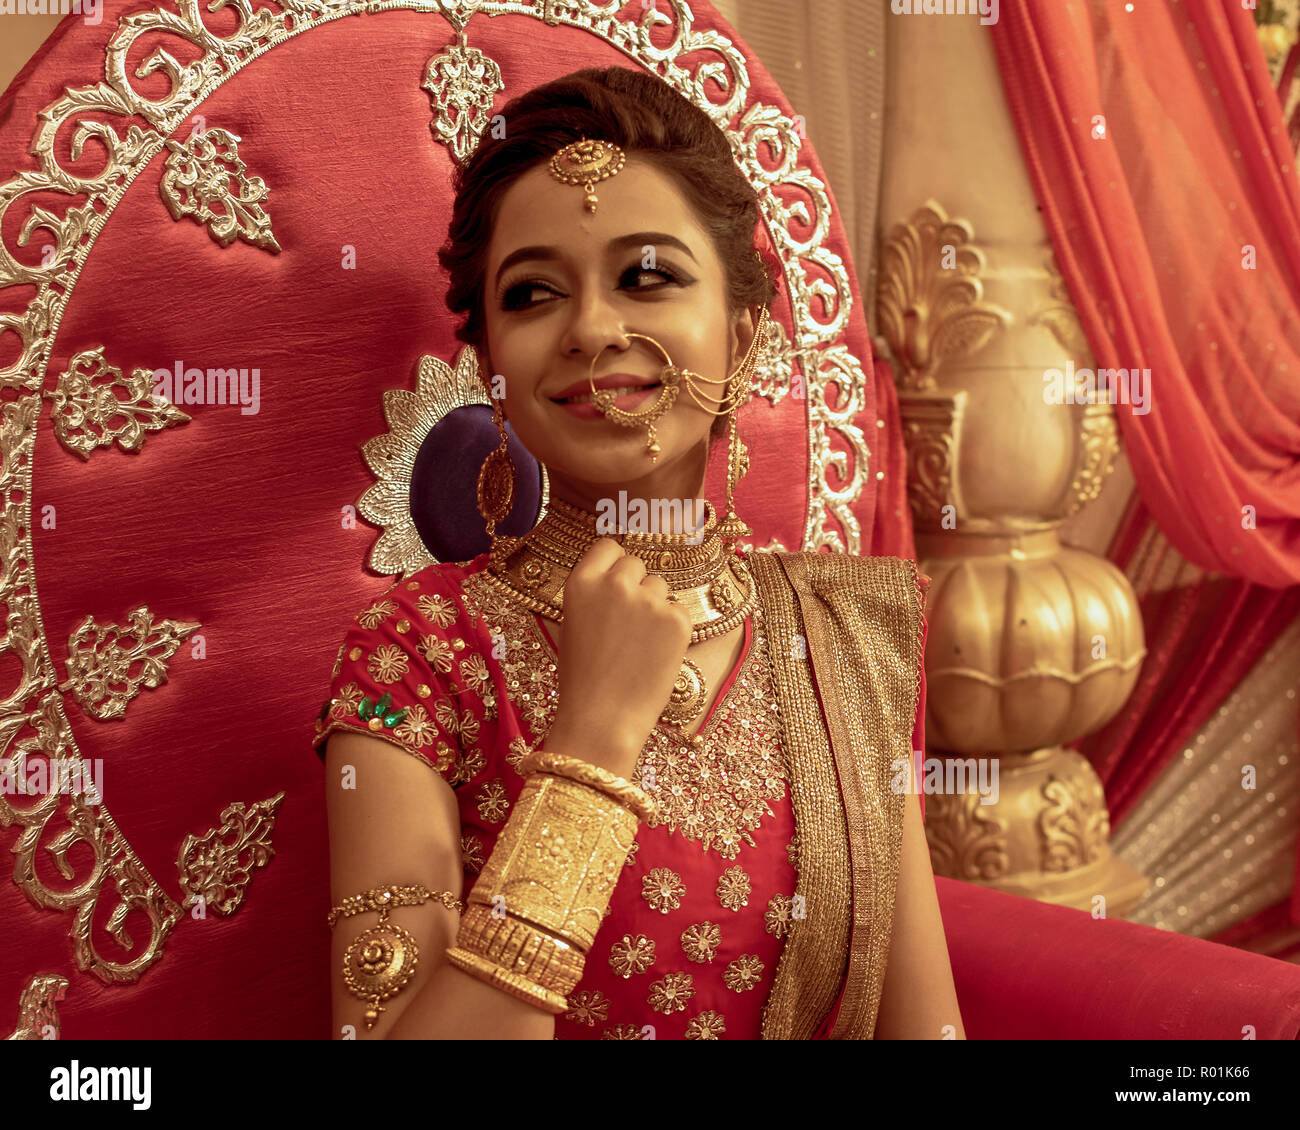 Pin by Dew Drop 🎀 on Bangladeshi Brides | Indian bride photography poses,  Indian wedding bride, Bride photos poses